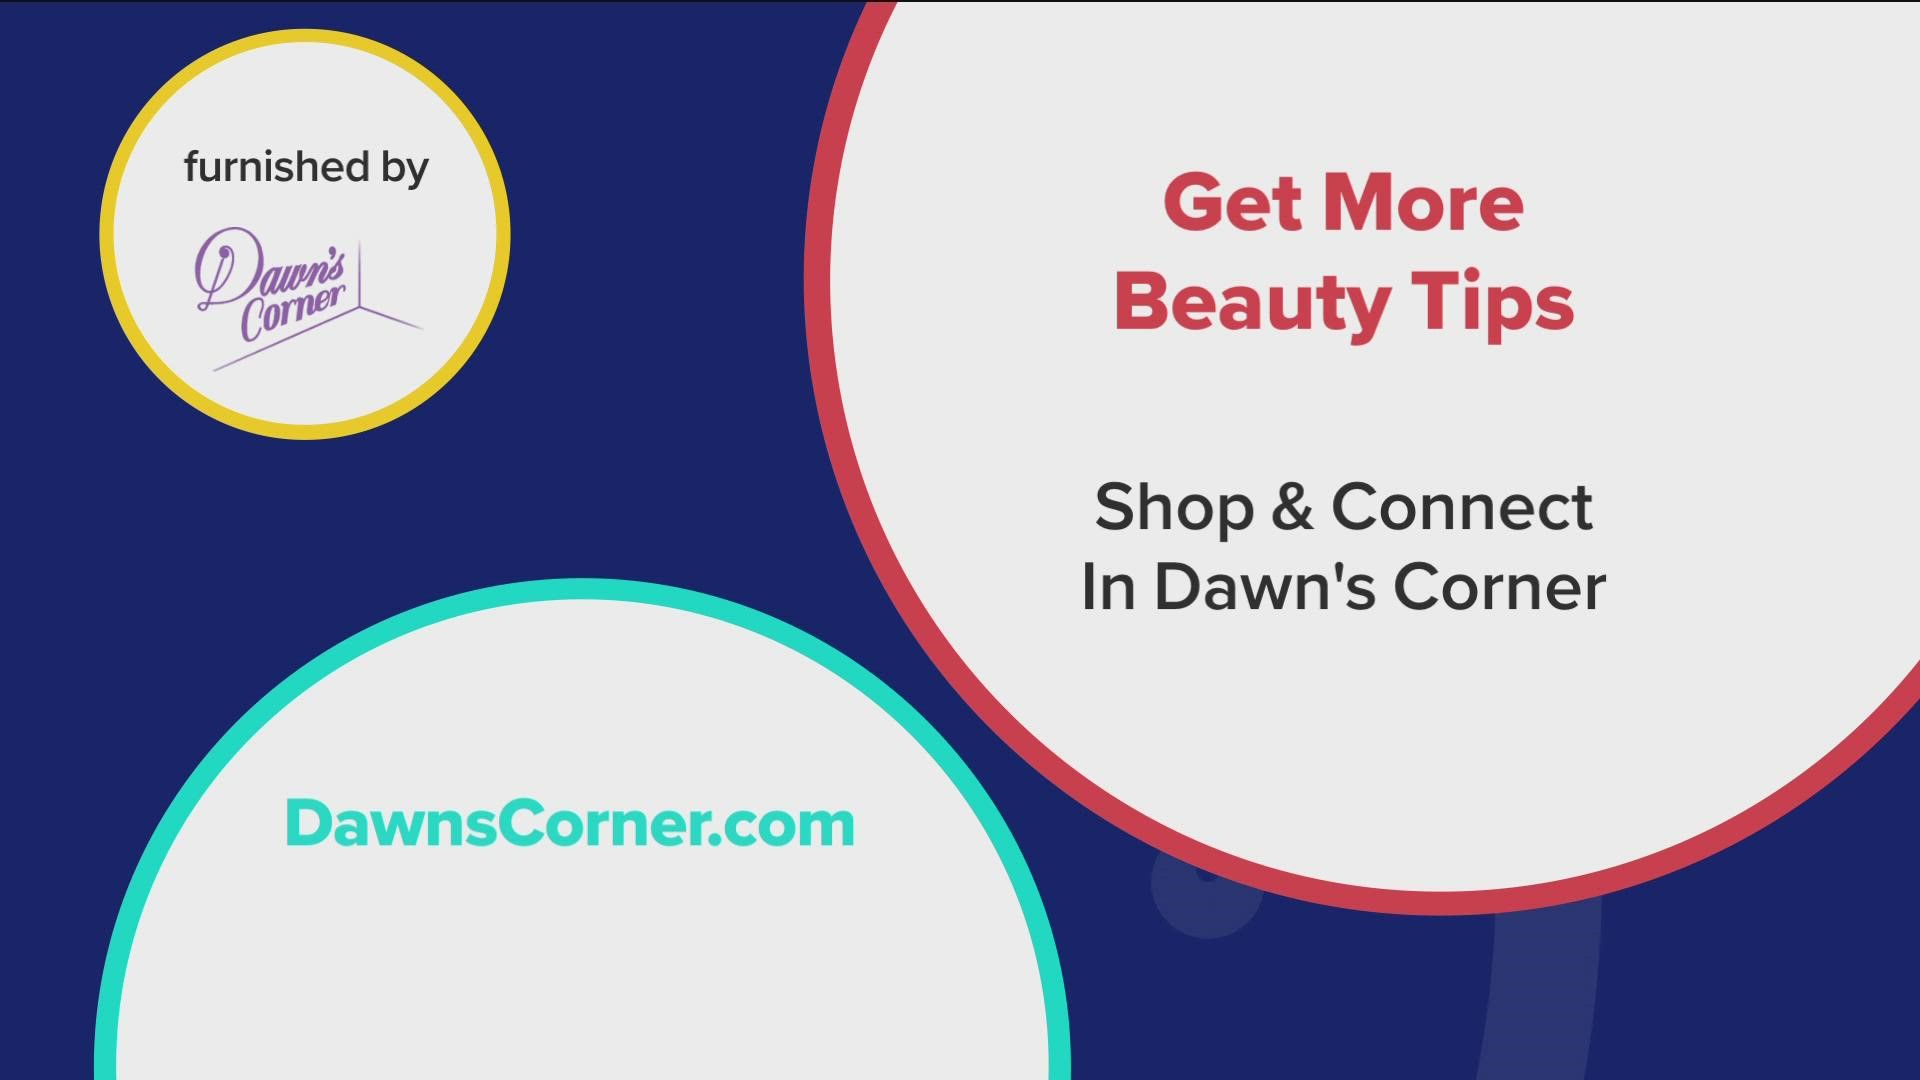 Visit DawnsCorner.com for more great tips like this!